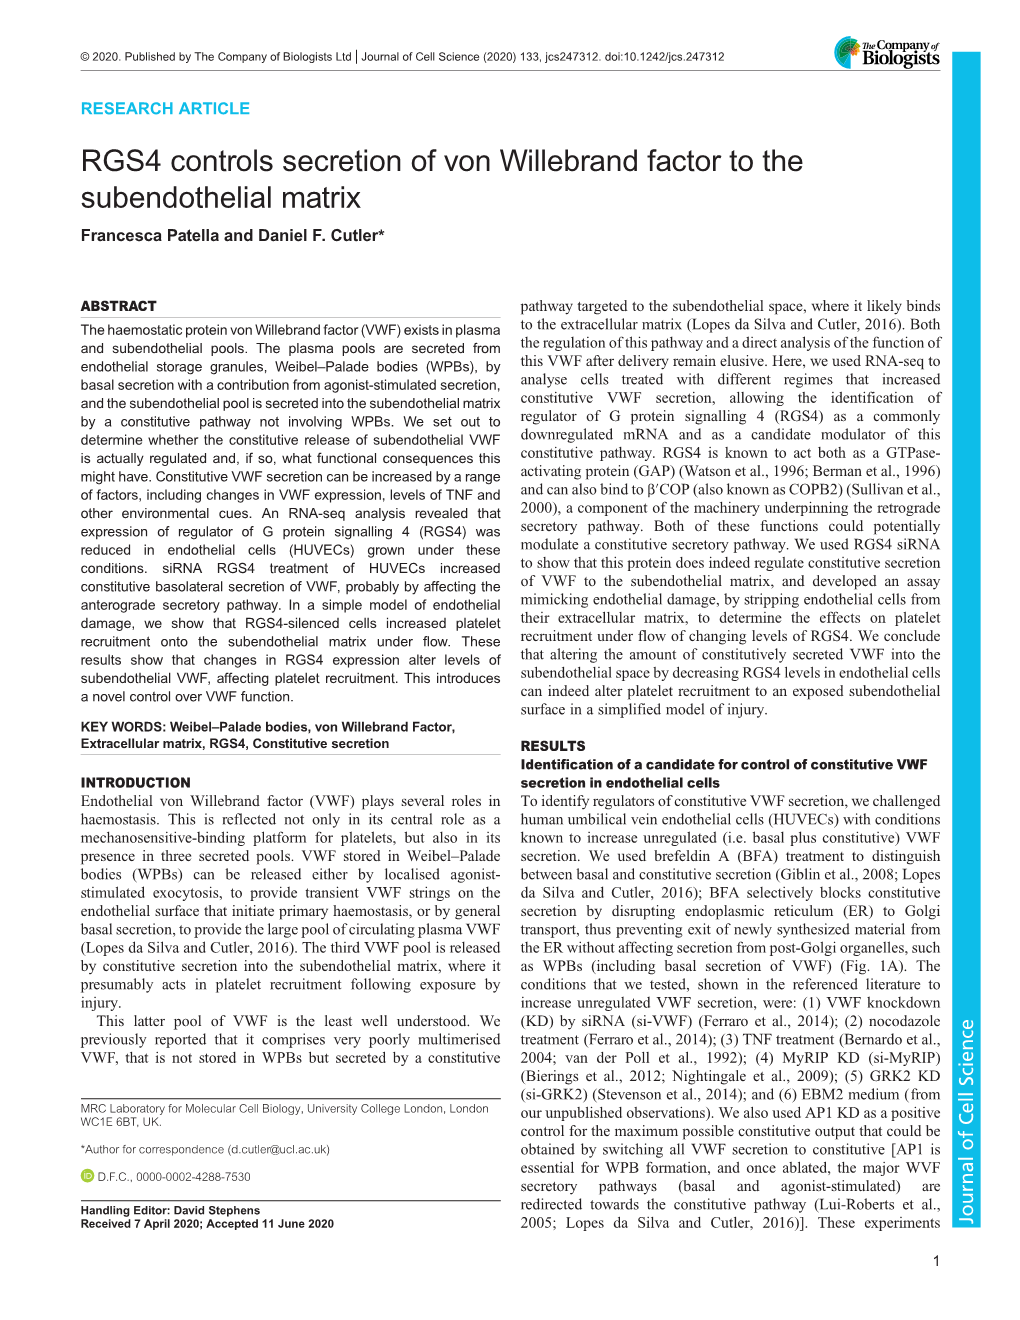 RGS4 Controls Secretion of Von Willebrand Factor to the Subendothelial Matrix Francesca Patella and Daniel F